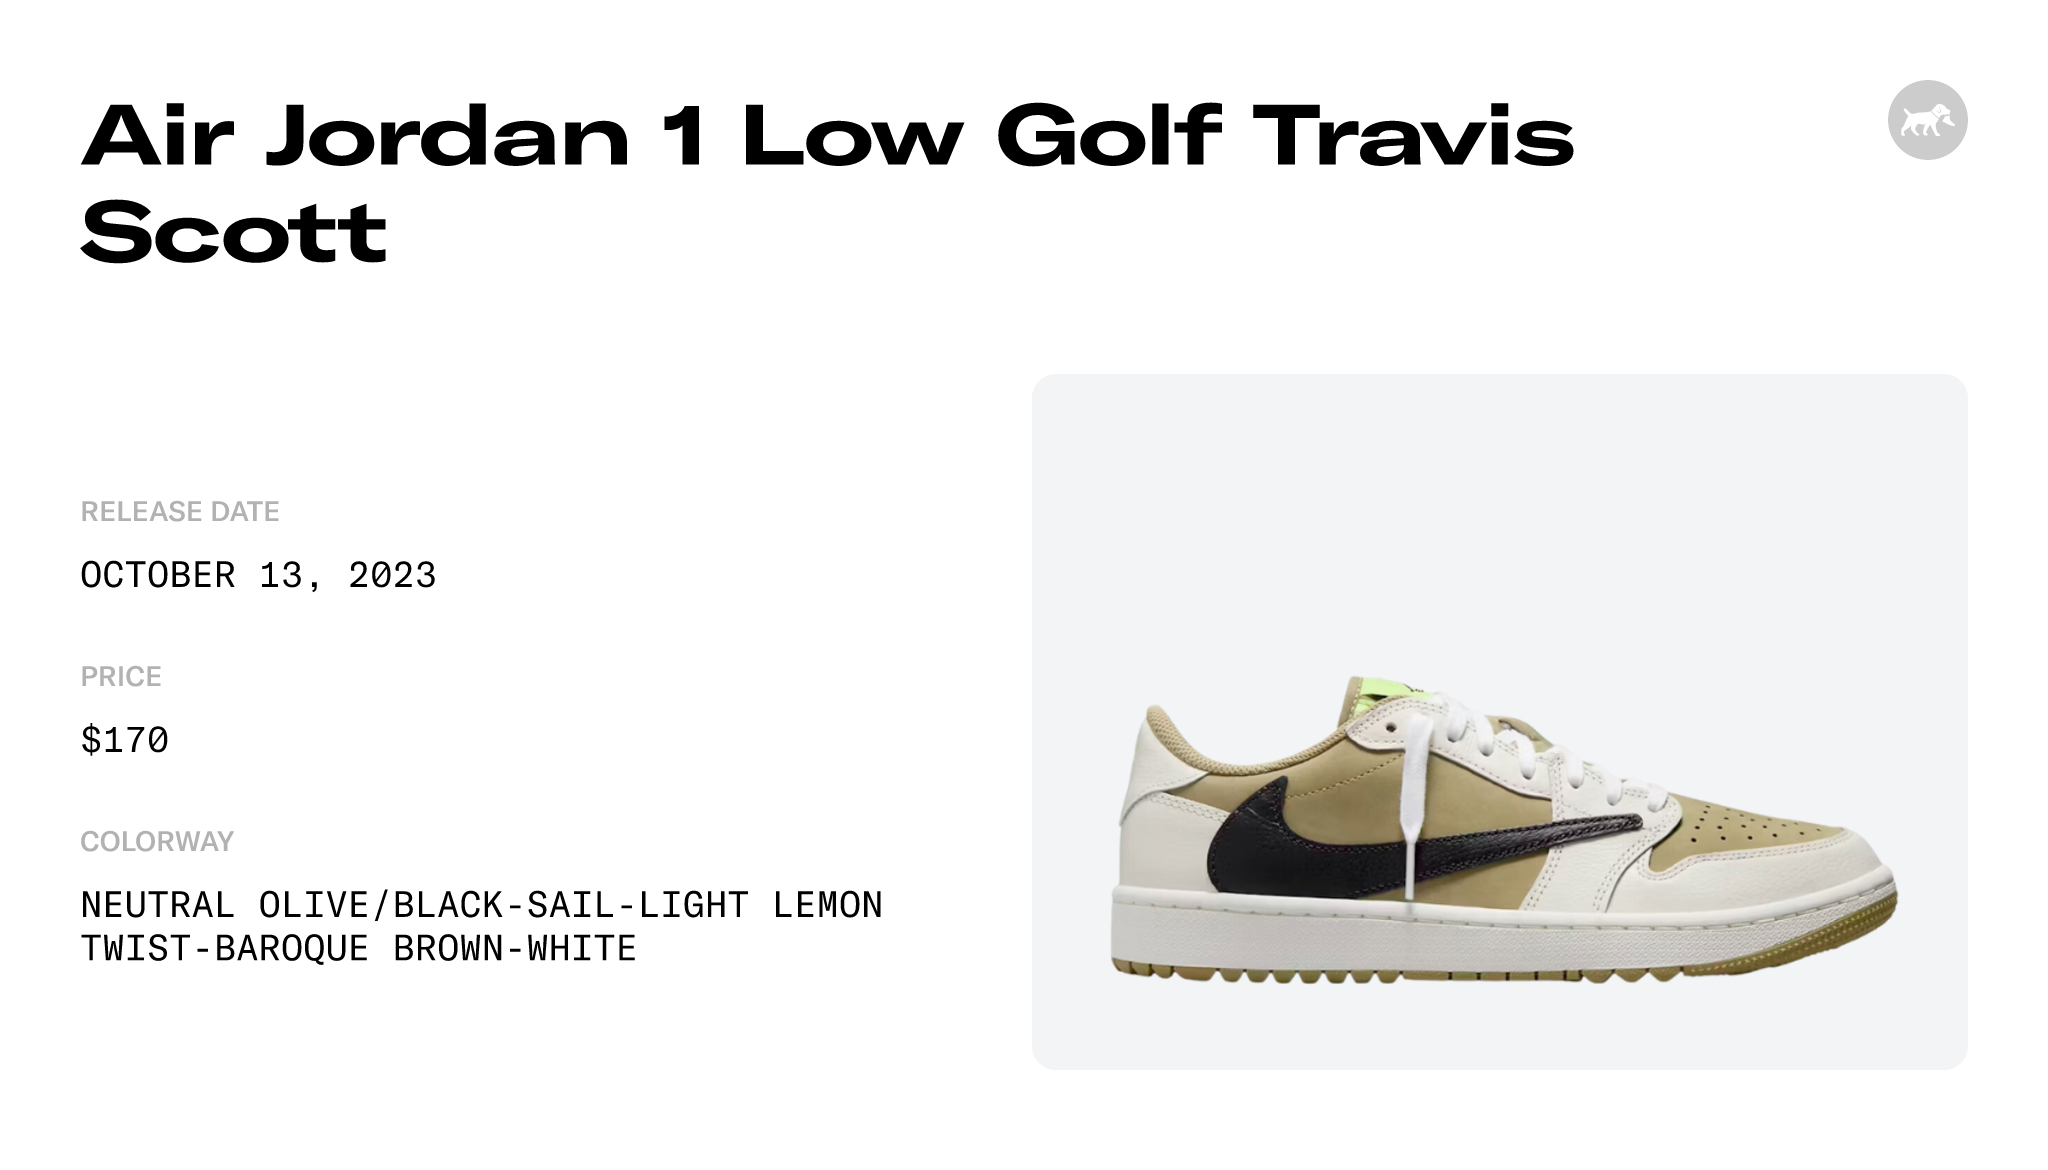 Travis Scott X Air Jordan 1 Low Golf 'Neutral Olive' - Air Jordan - FZ3124  200 - neutral olive/black/sail/light lemon twist/baroque brown/white